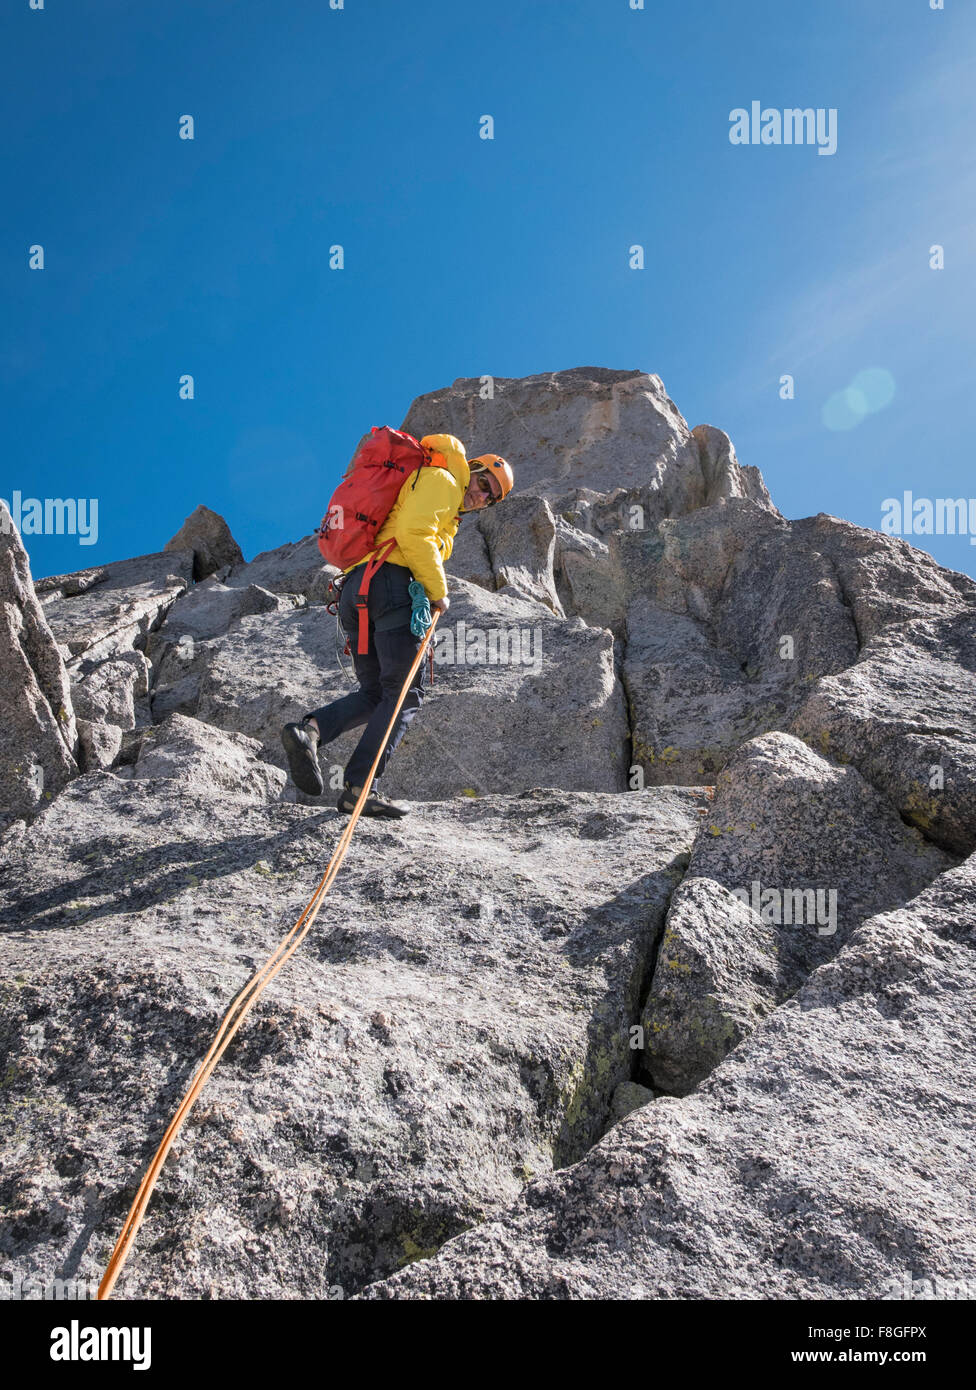 Kaukasische Bergsteiger am Berg Stockfoto